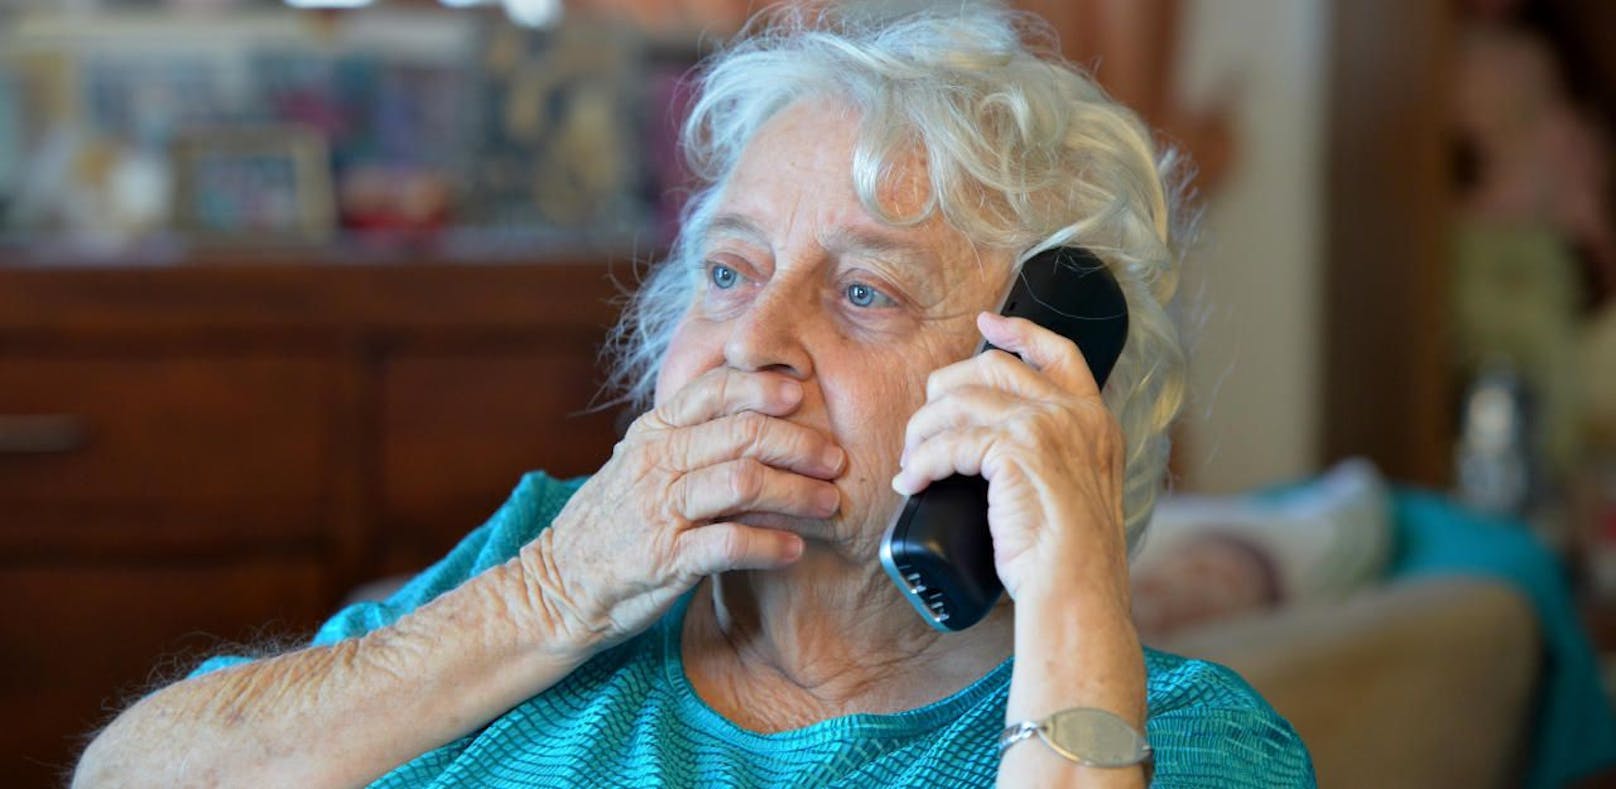 Die Betrüger rufen gezielt ältere Menschen an